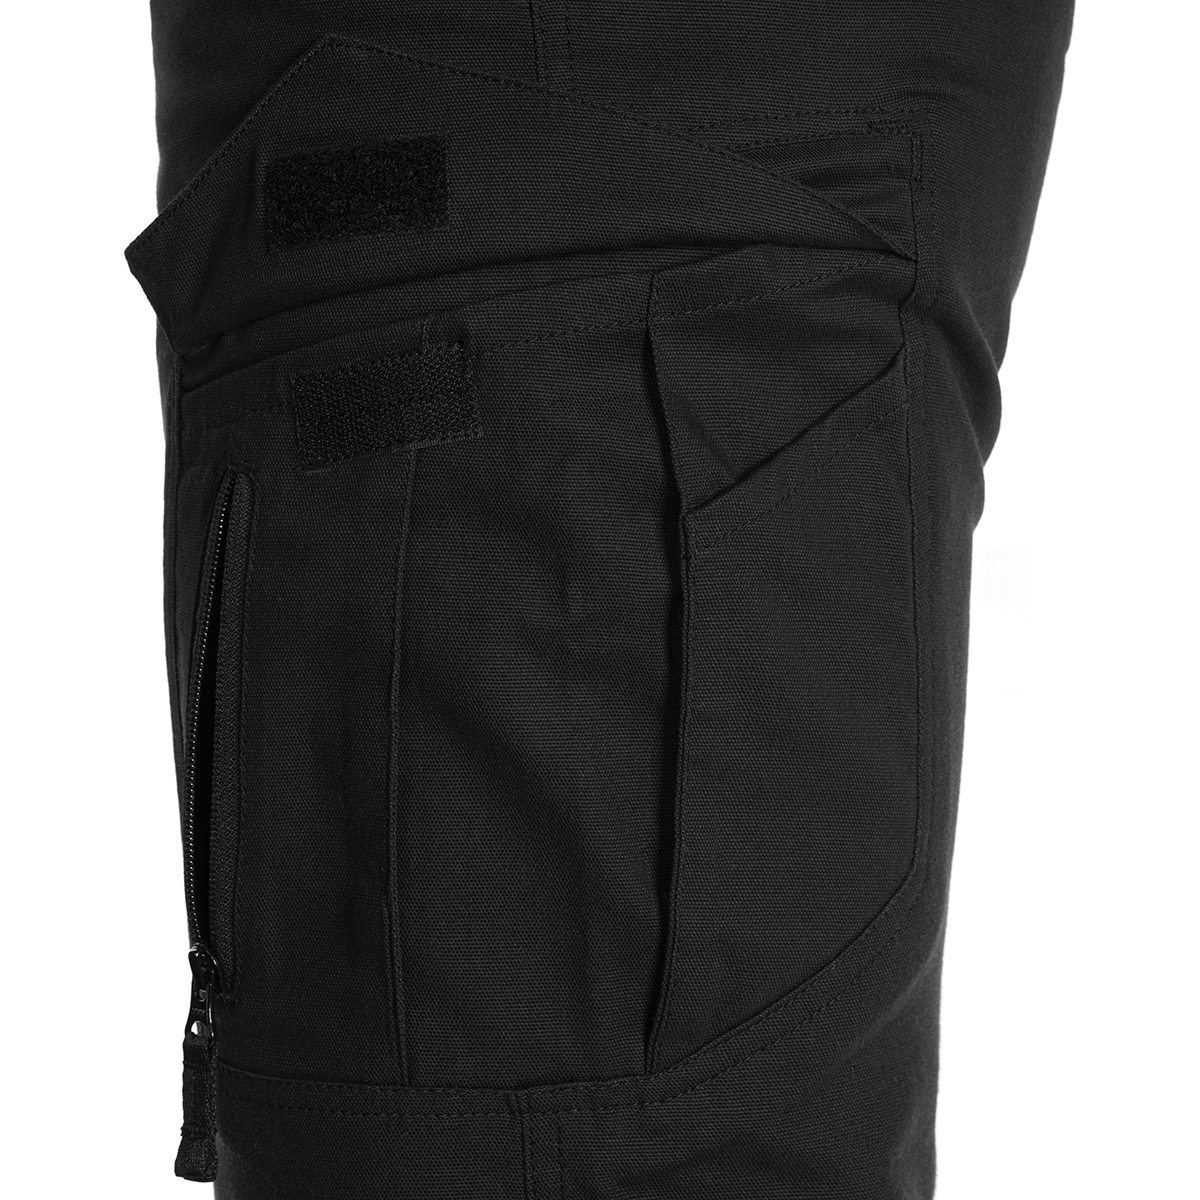 spodnie-elite-pro-2-0-czarne-01-eli2-pa-kieszen-bok.jpg